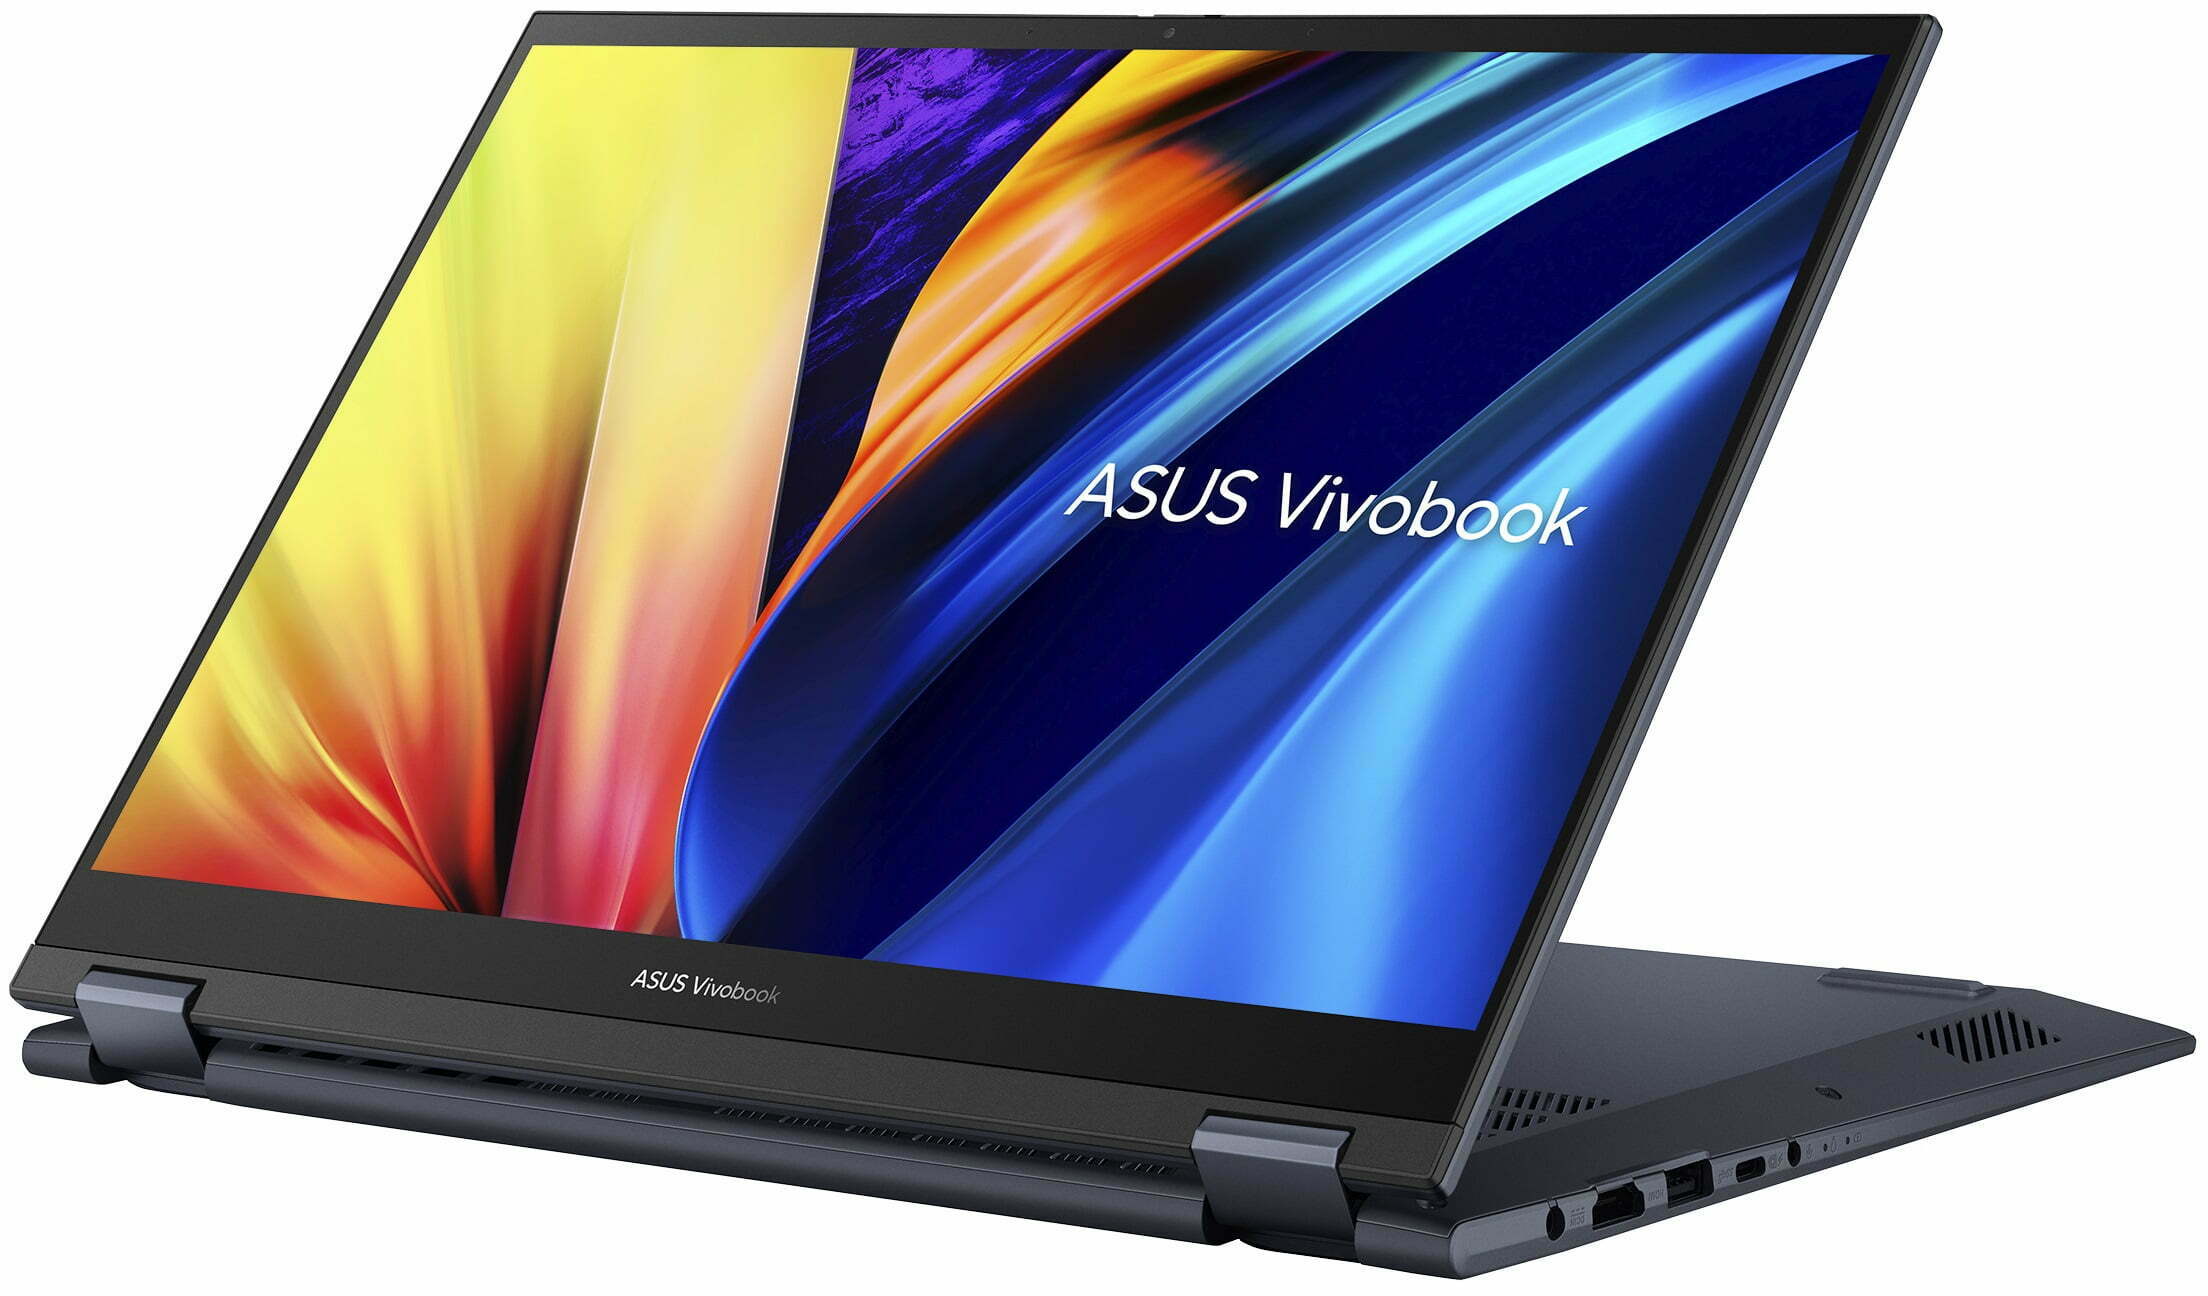 Asus Vivobook S 14 Flip review: a value-first laptop